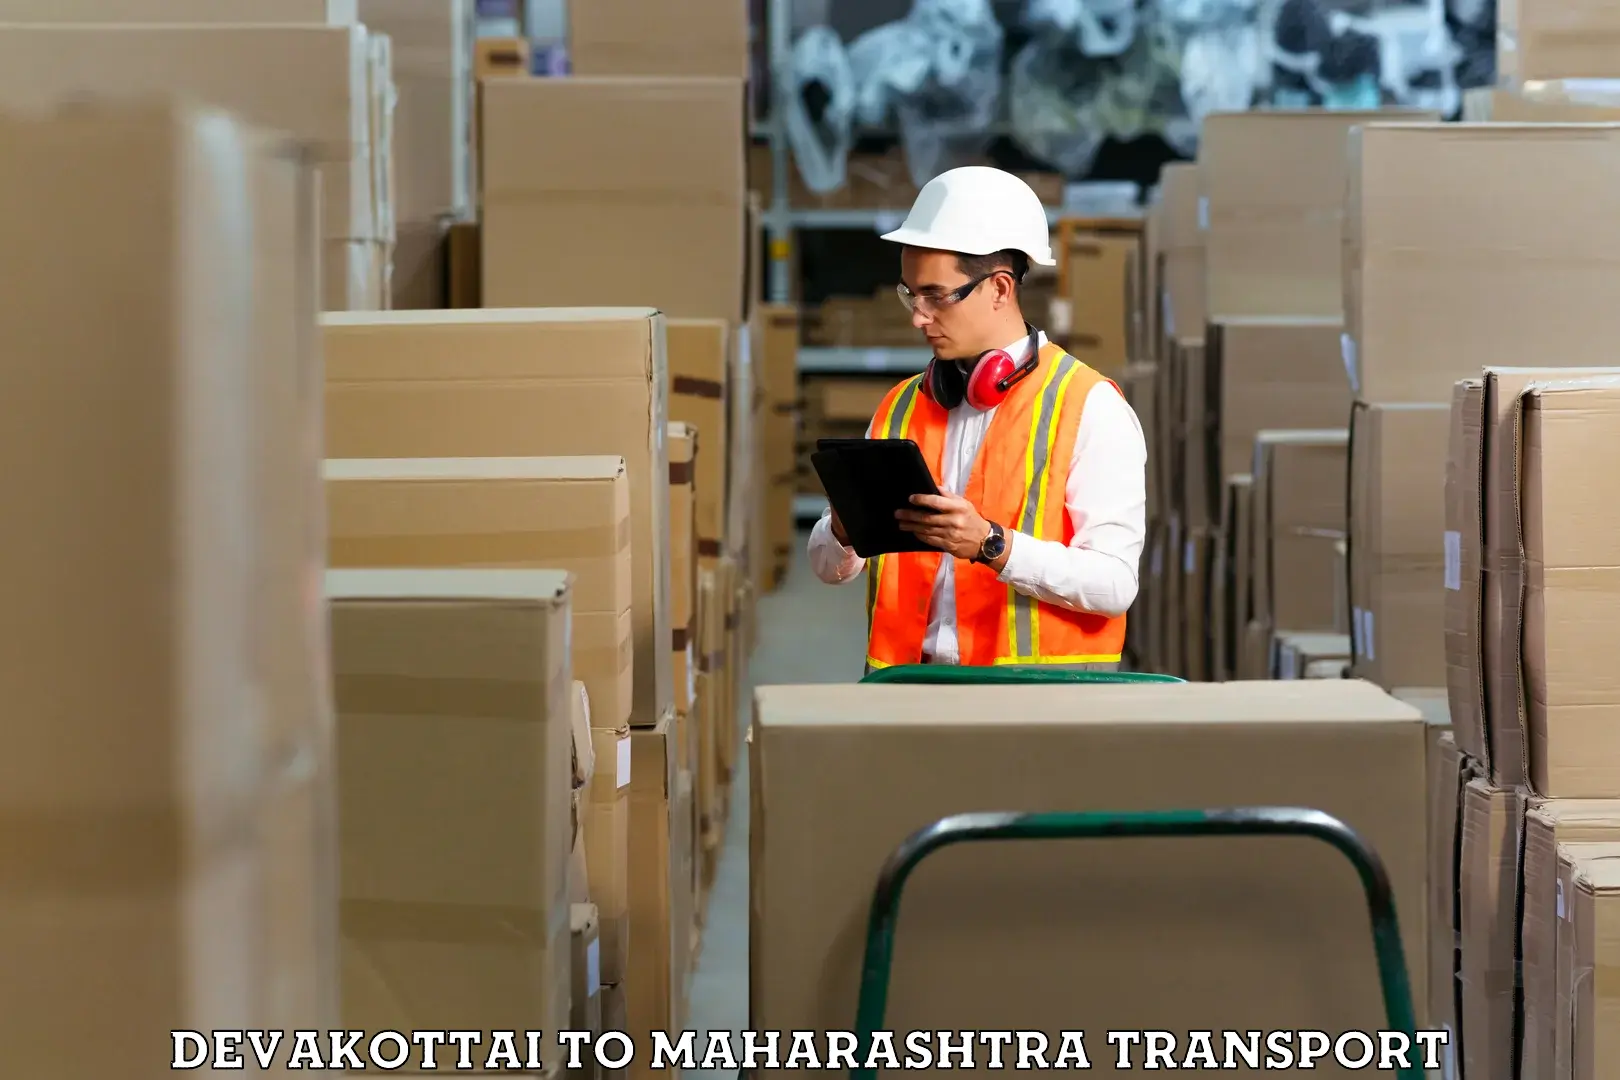 Furniture transport service Devakottai to Bhokar